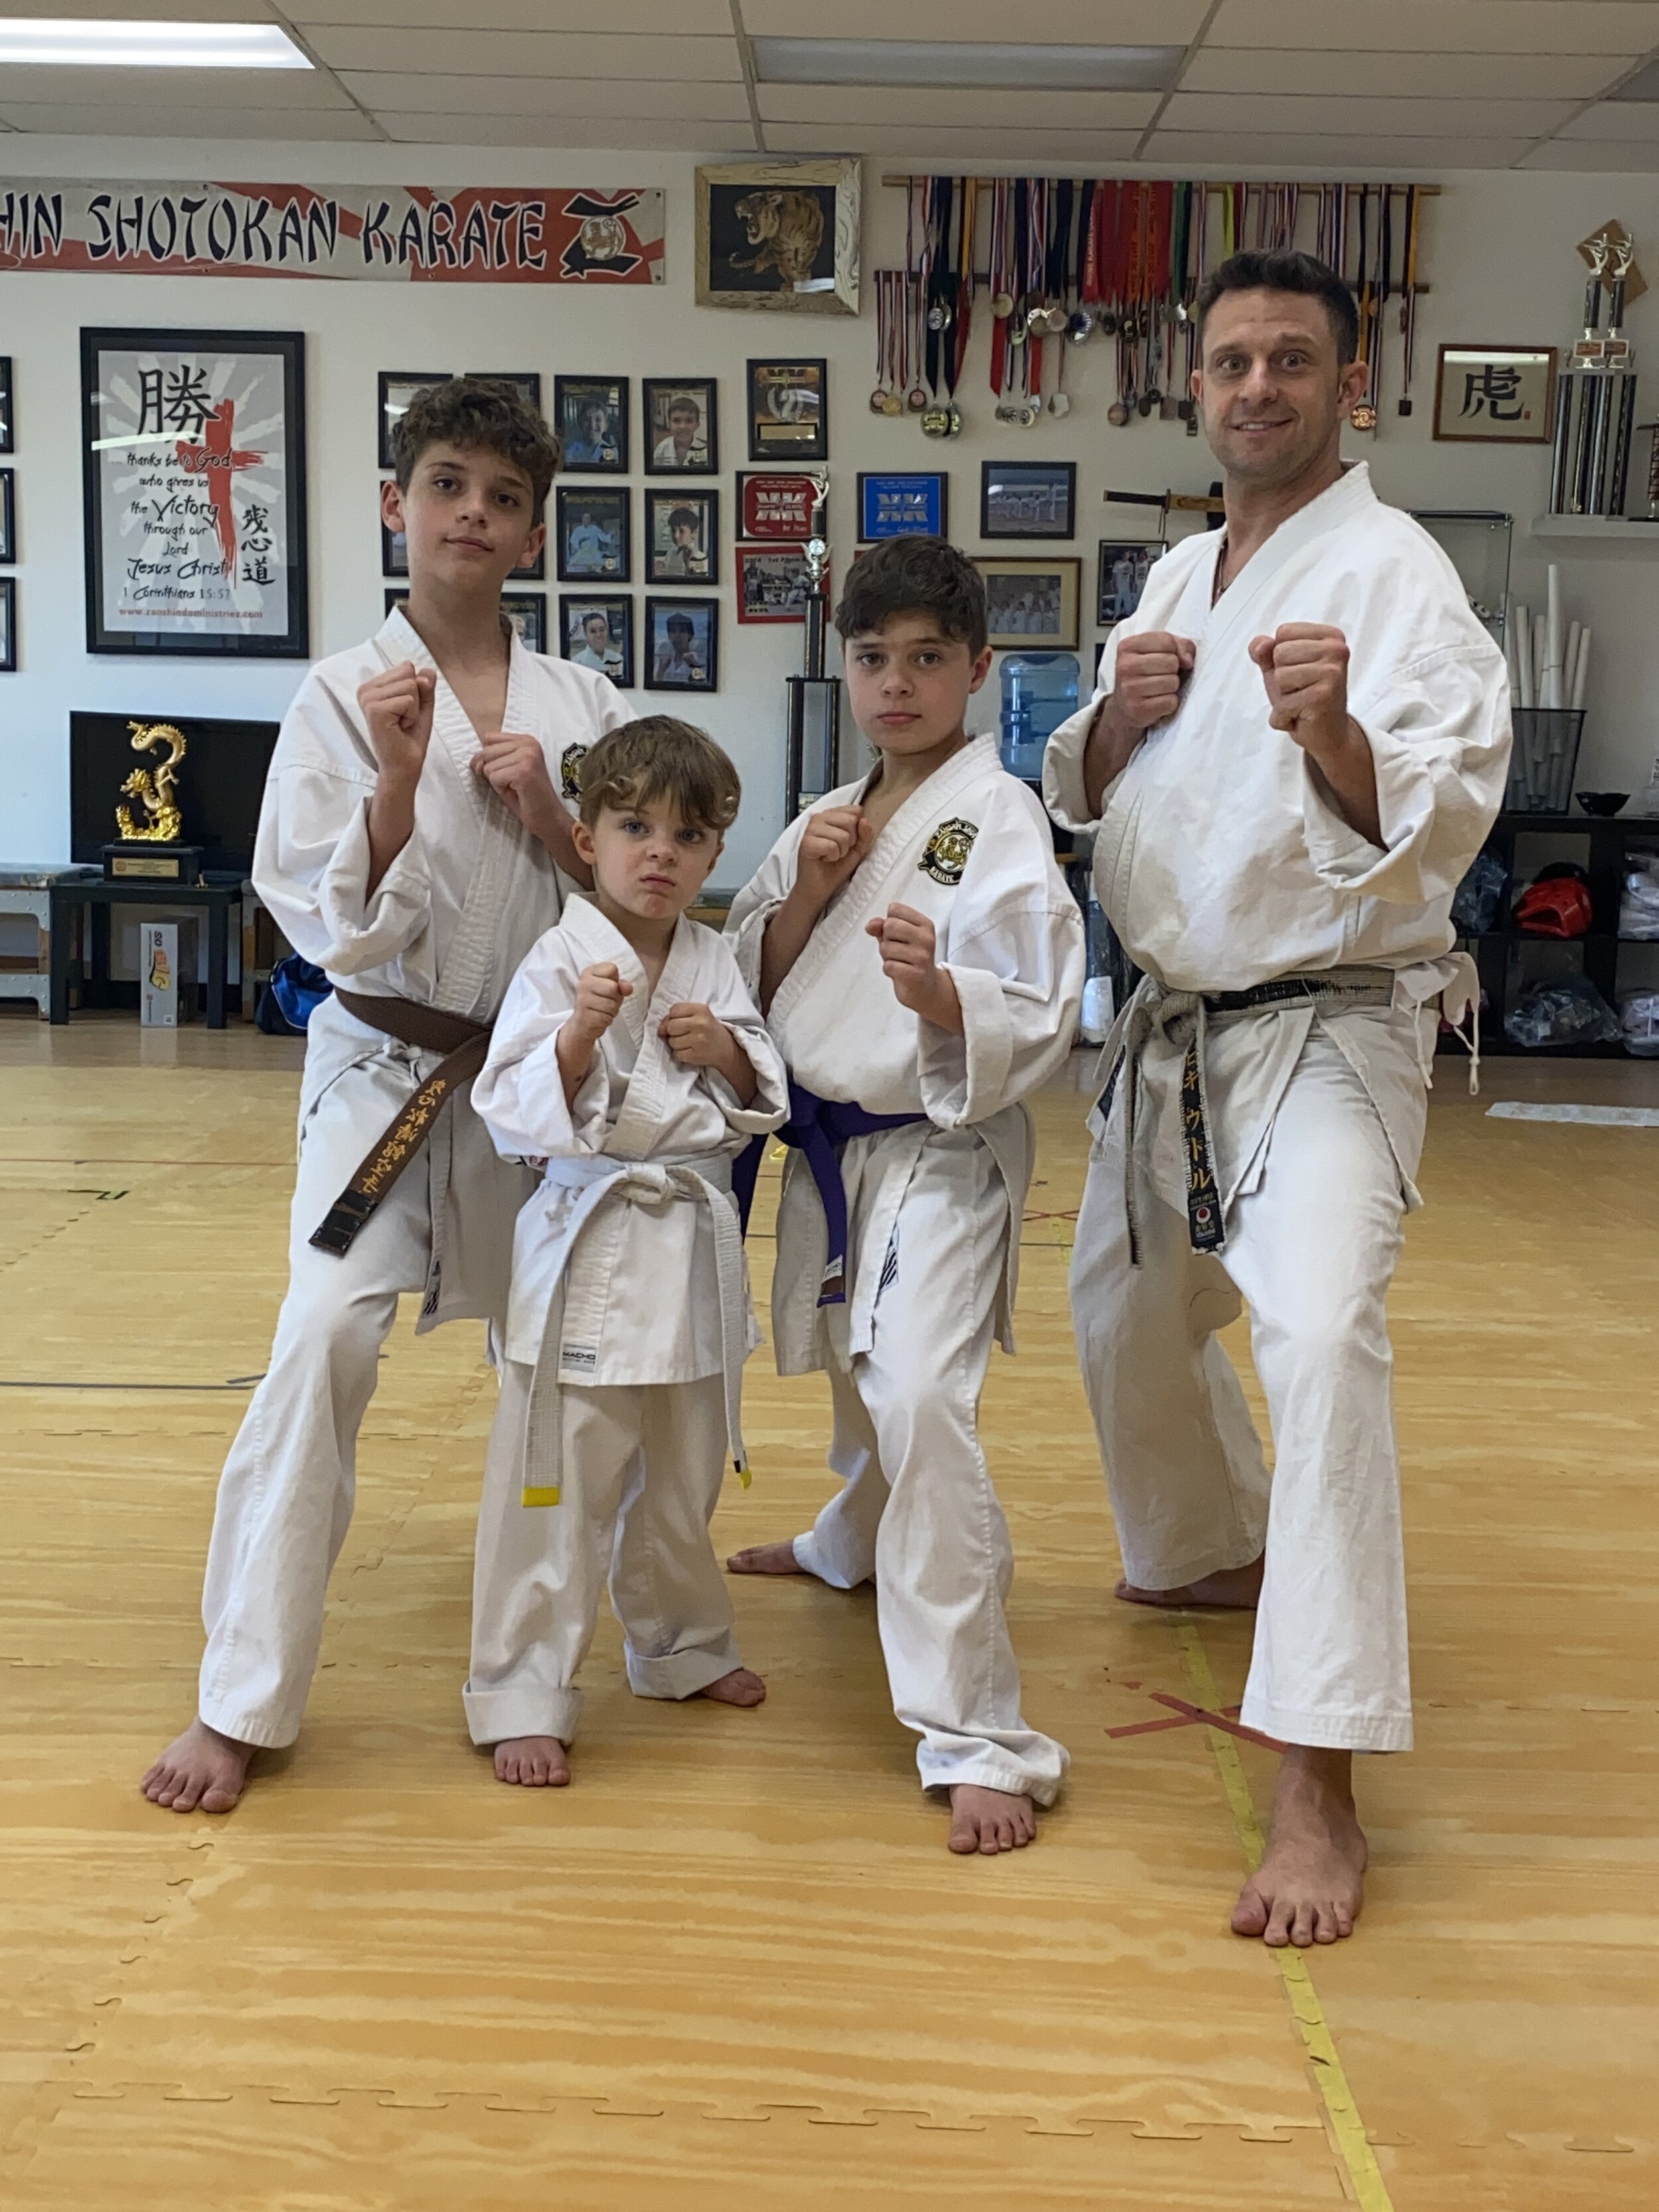 SHOGUN Shotokan karate/martial arts belts 